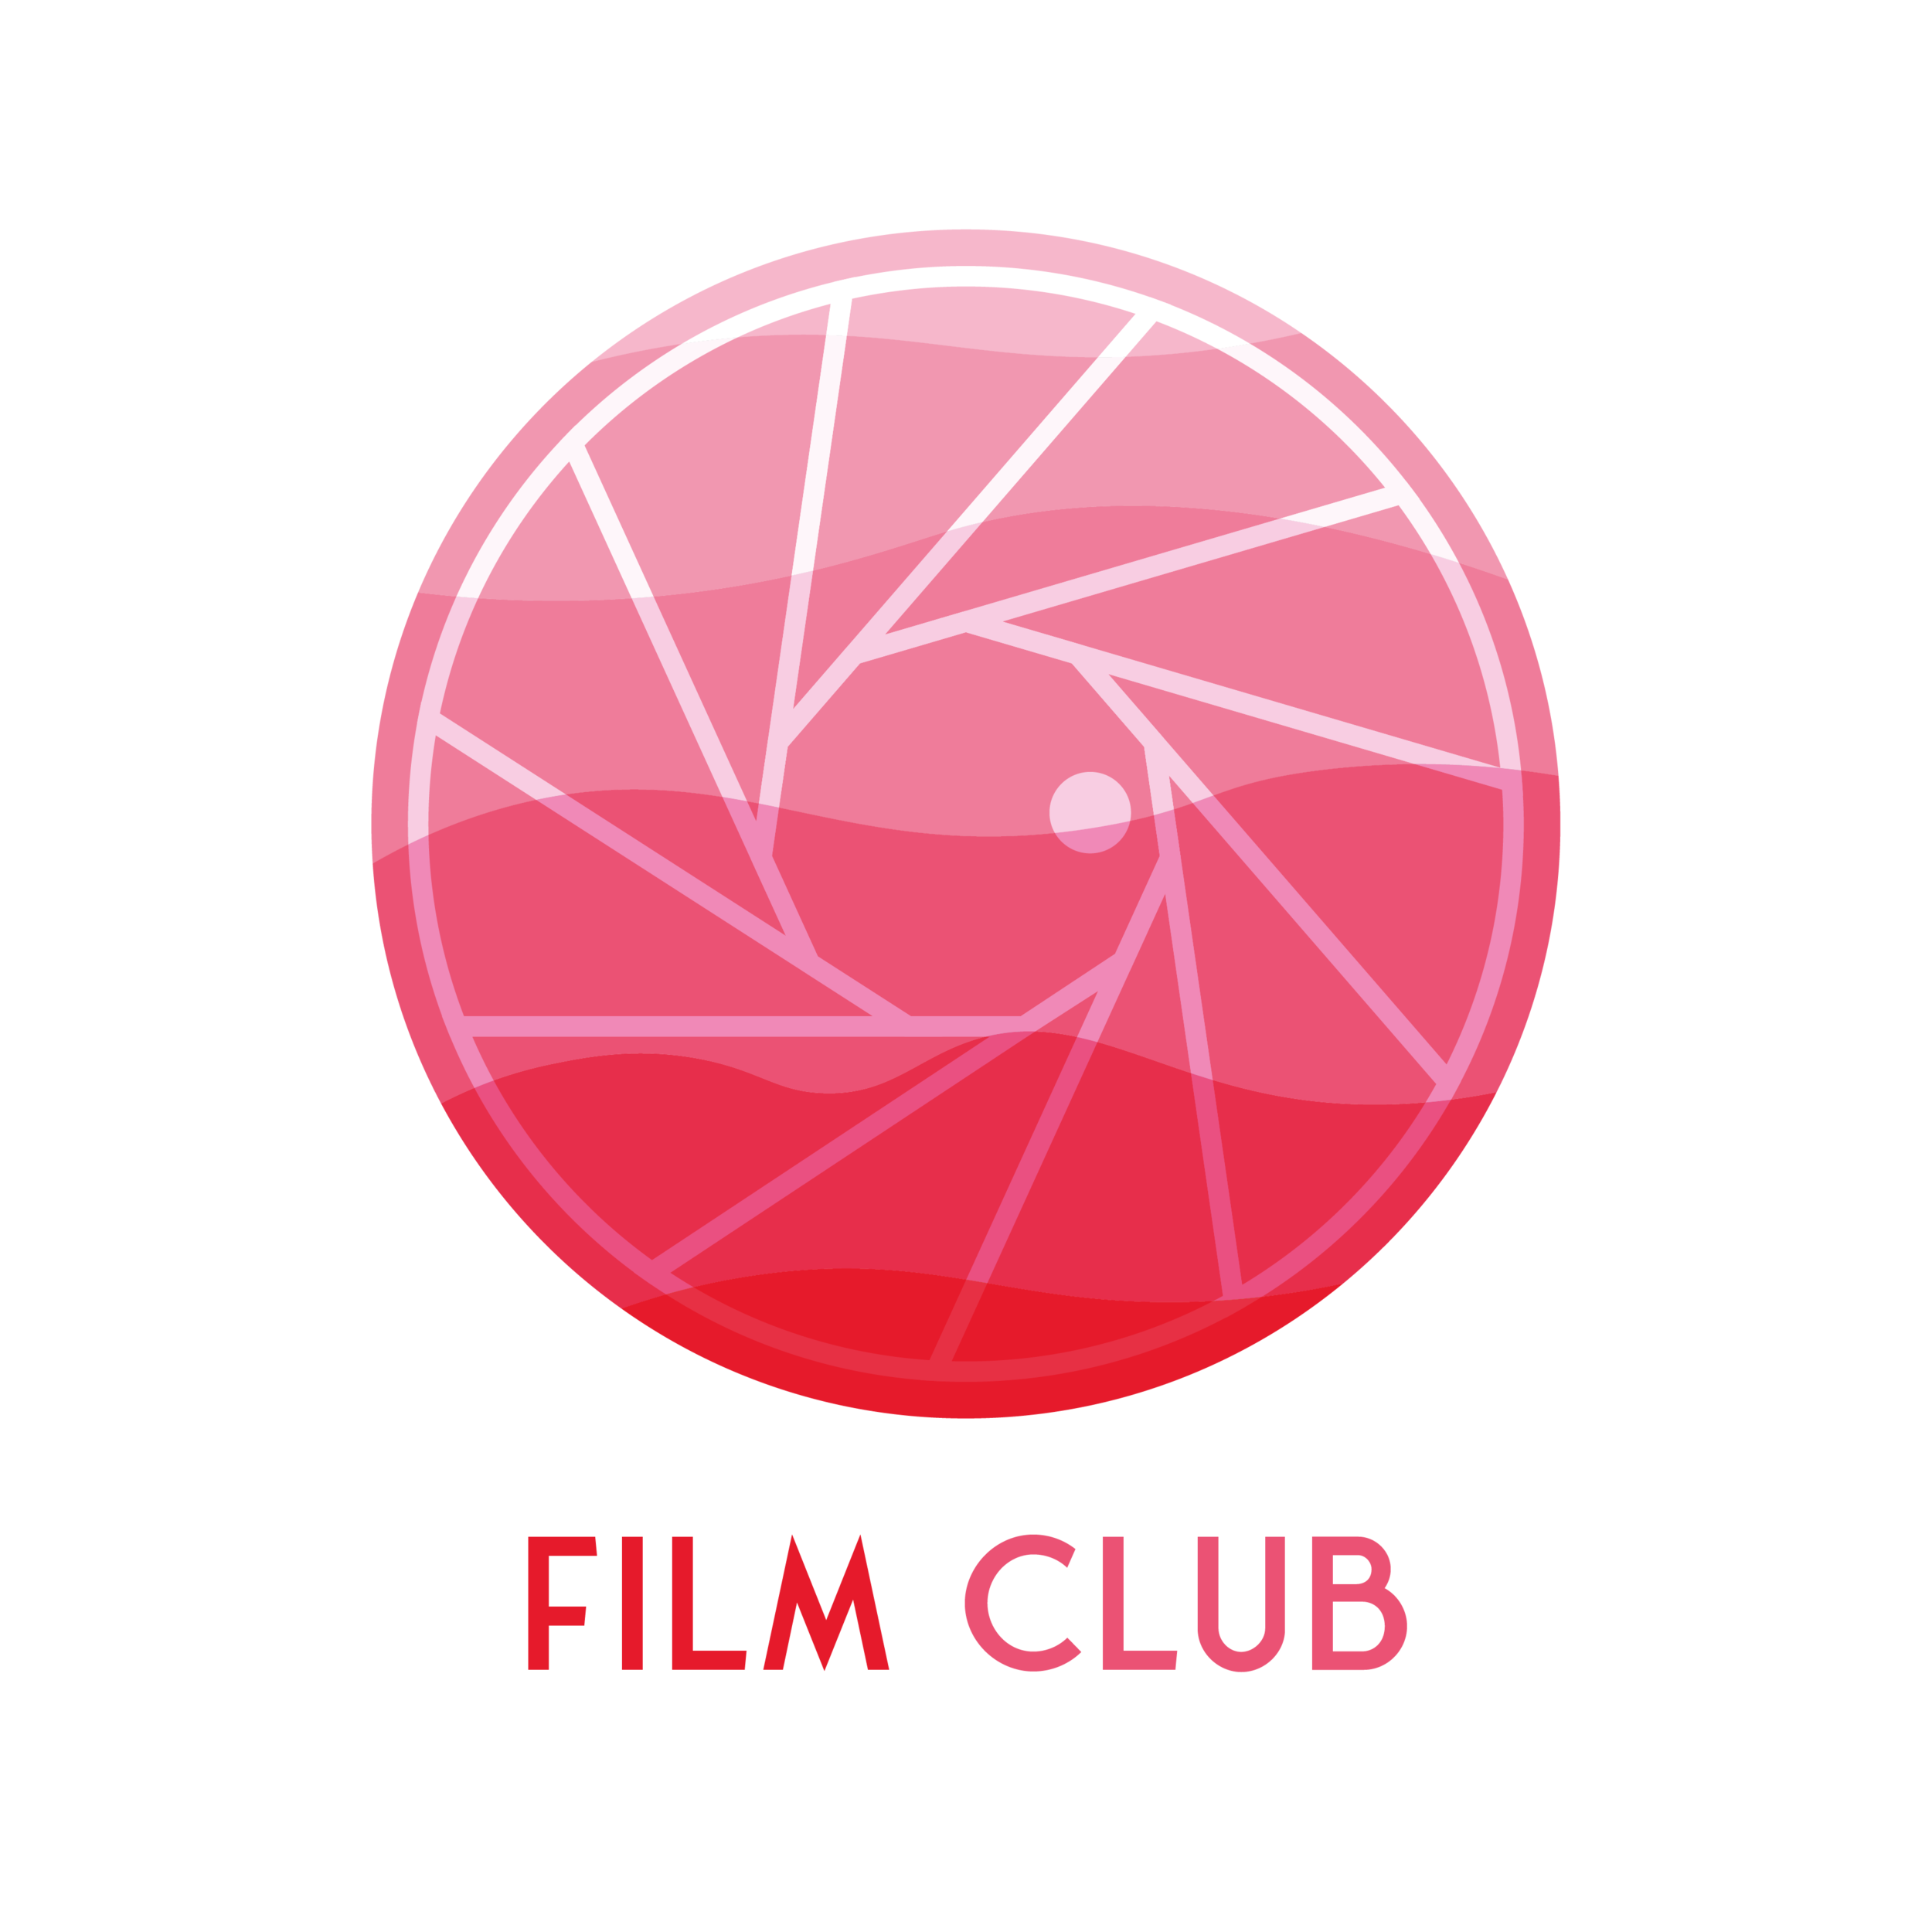 Film Club Transparent.png